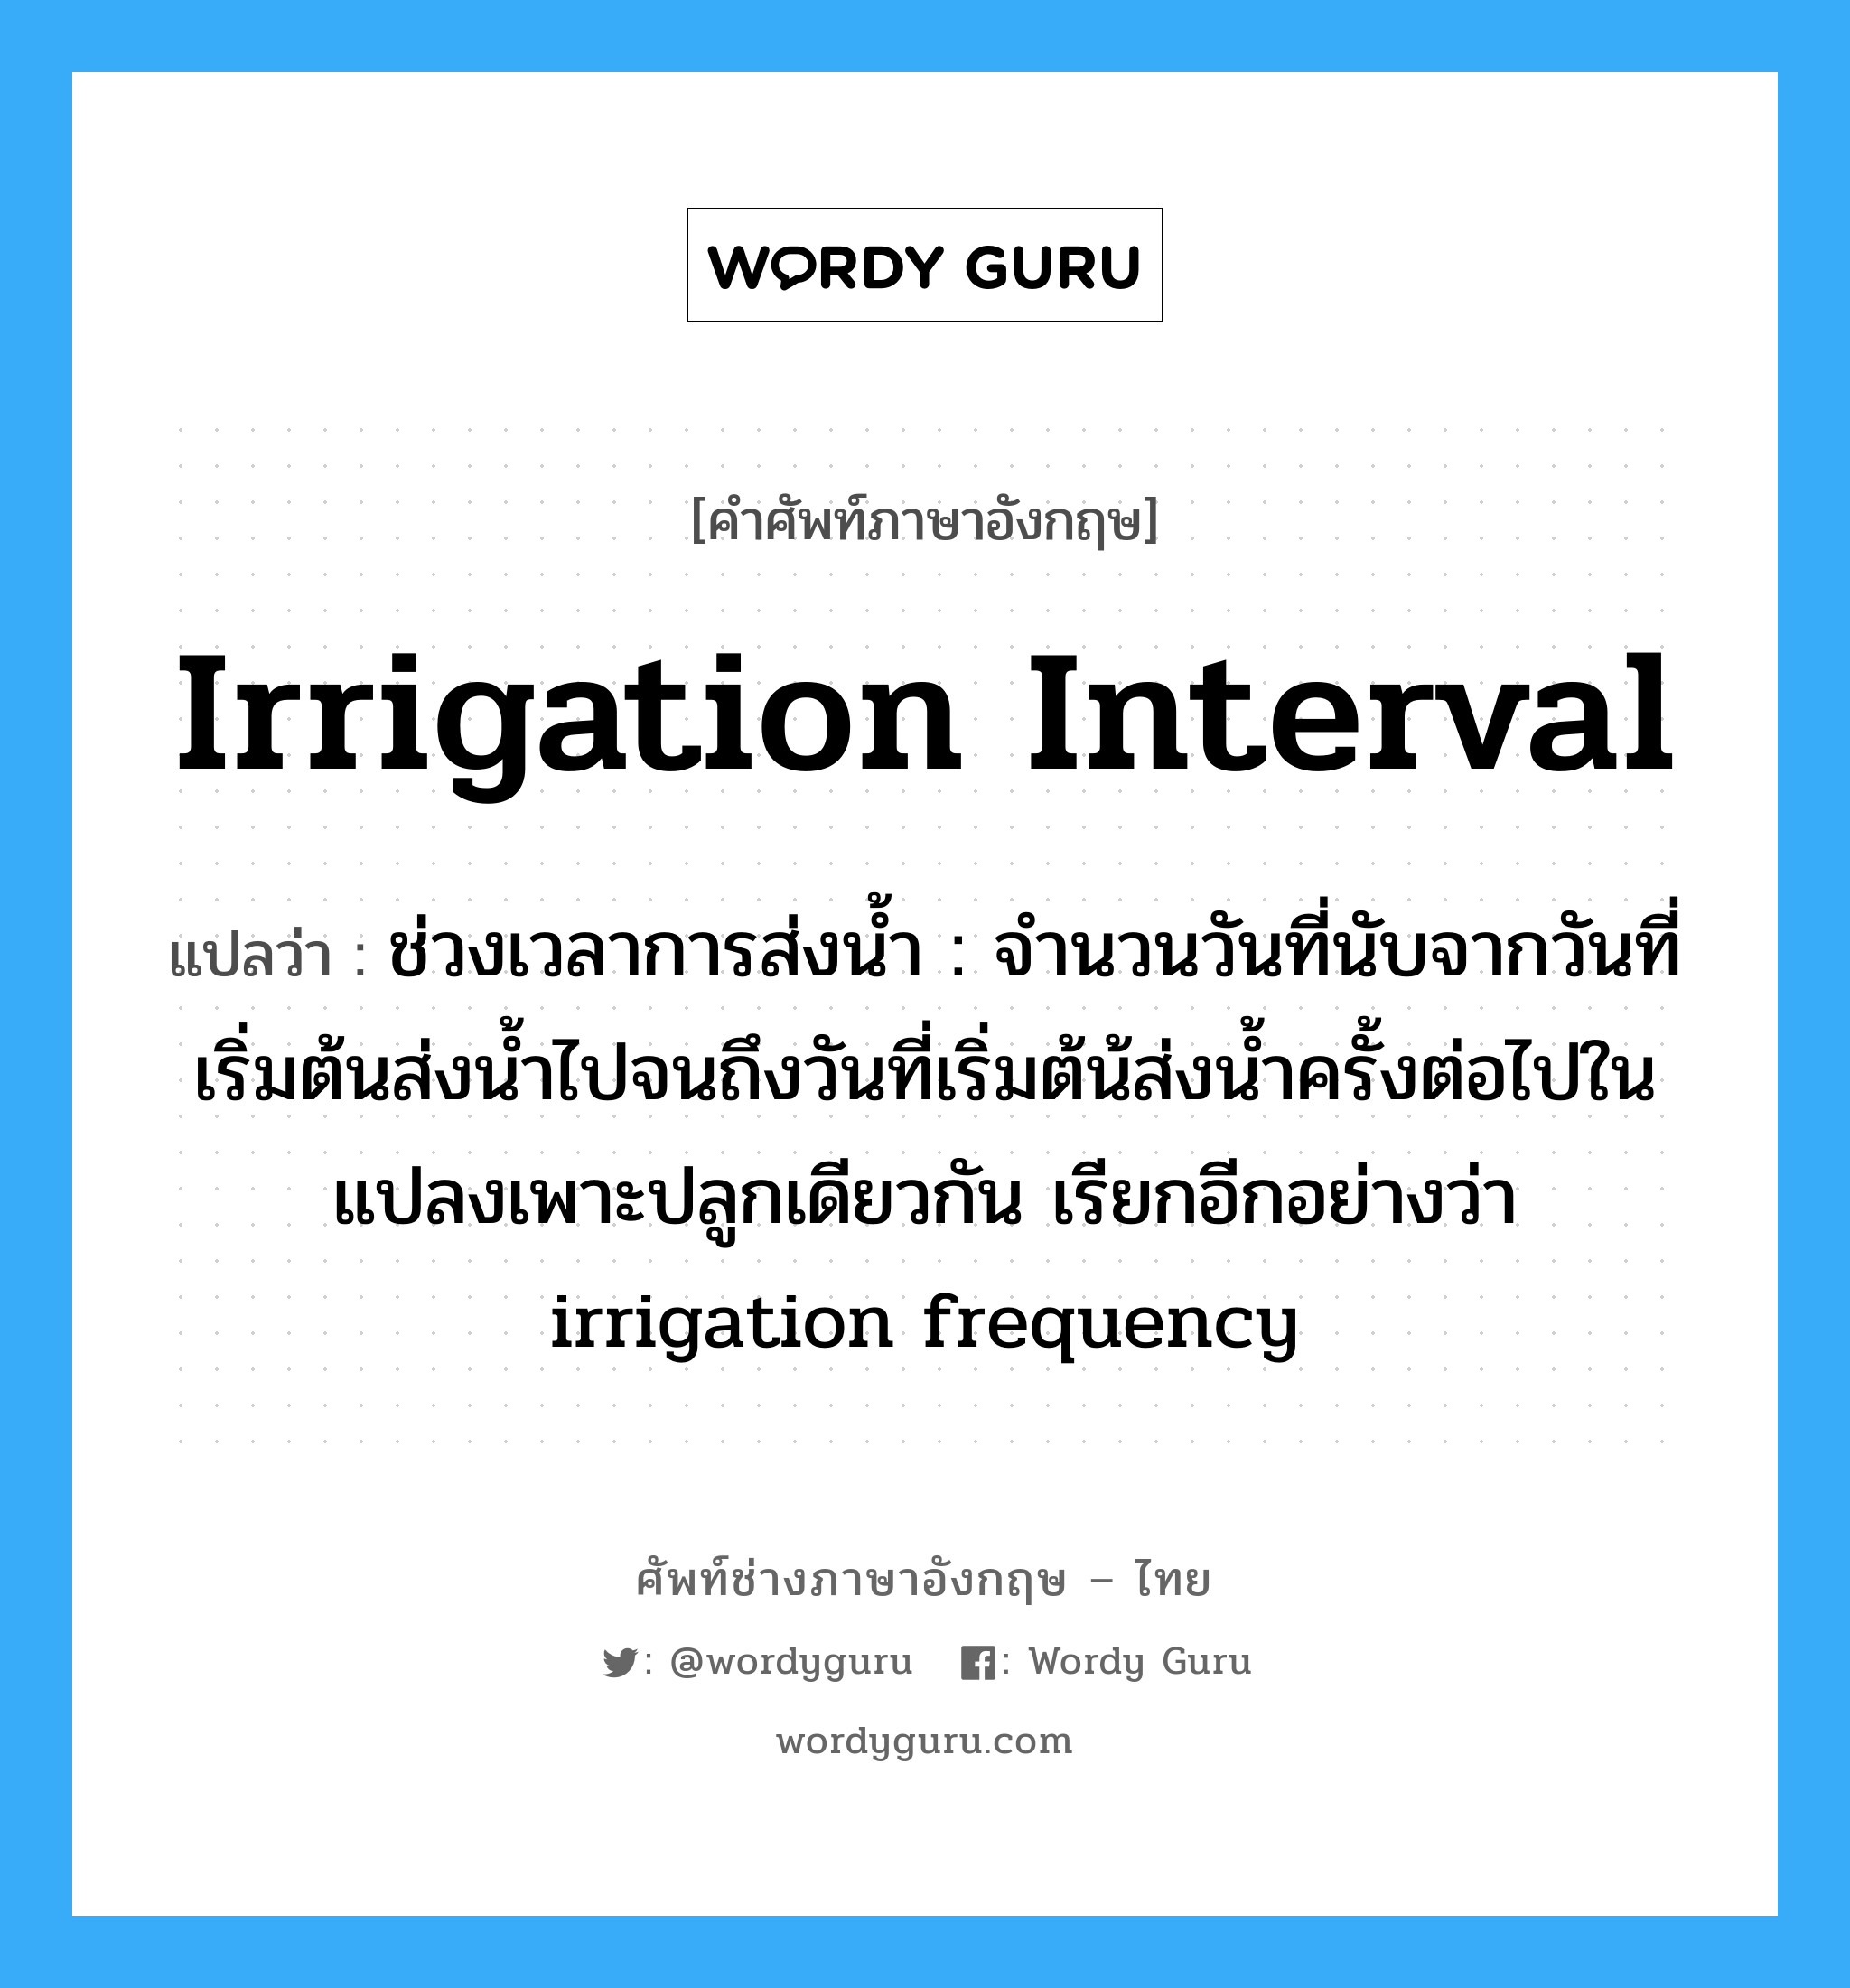 irrigation interval แปลว่า?, คำศัพท์ช่างภาษาอังกฤษ - ไทย irrigation interval คำศัพท์ภาษาอังกฤษ irrigation interval แปลว่า ช่วงเวลาการส่งน้ำ : จำนวนวันที่นับจากวันที่เริ่มต้นส่งน้ำไปจนถึงวันที่เริ่มต้น้ส่งน้ำครั้งต่อไปใน แปลงเพาะปลูกเดียวกัน เรียกอีกอย่างว่า irrigation frequency